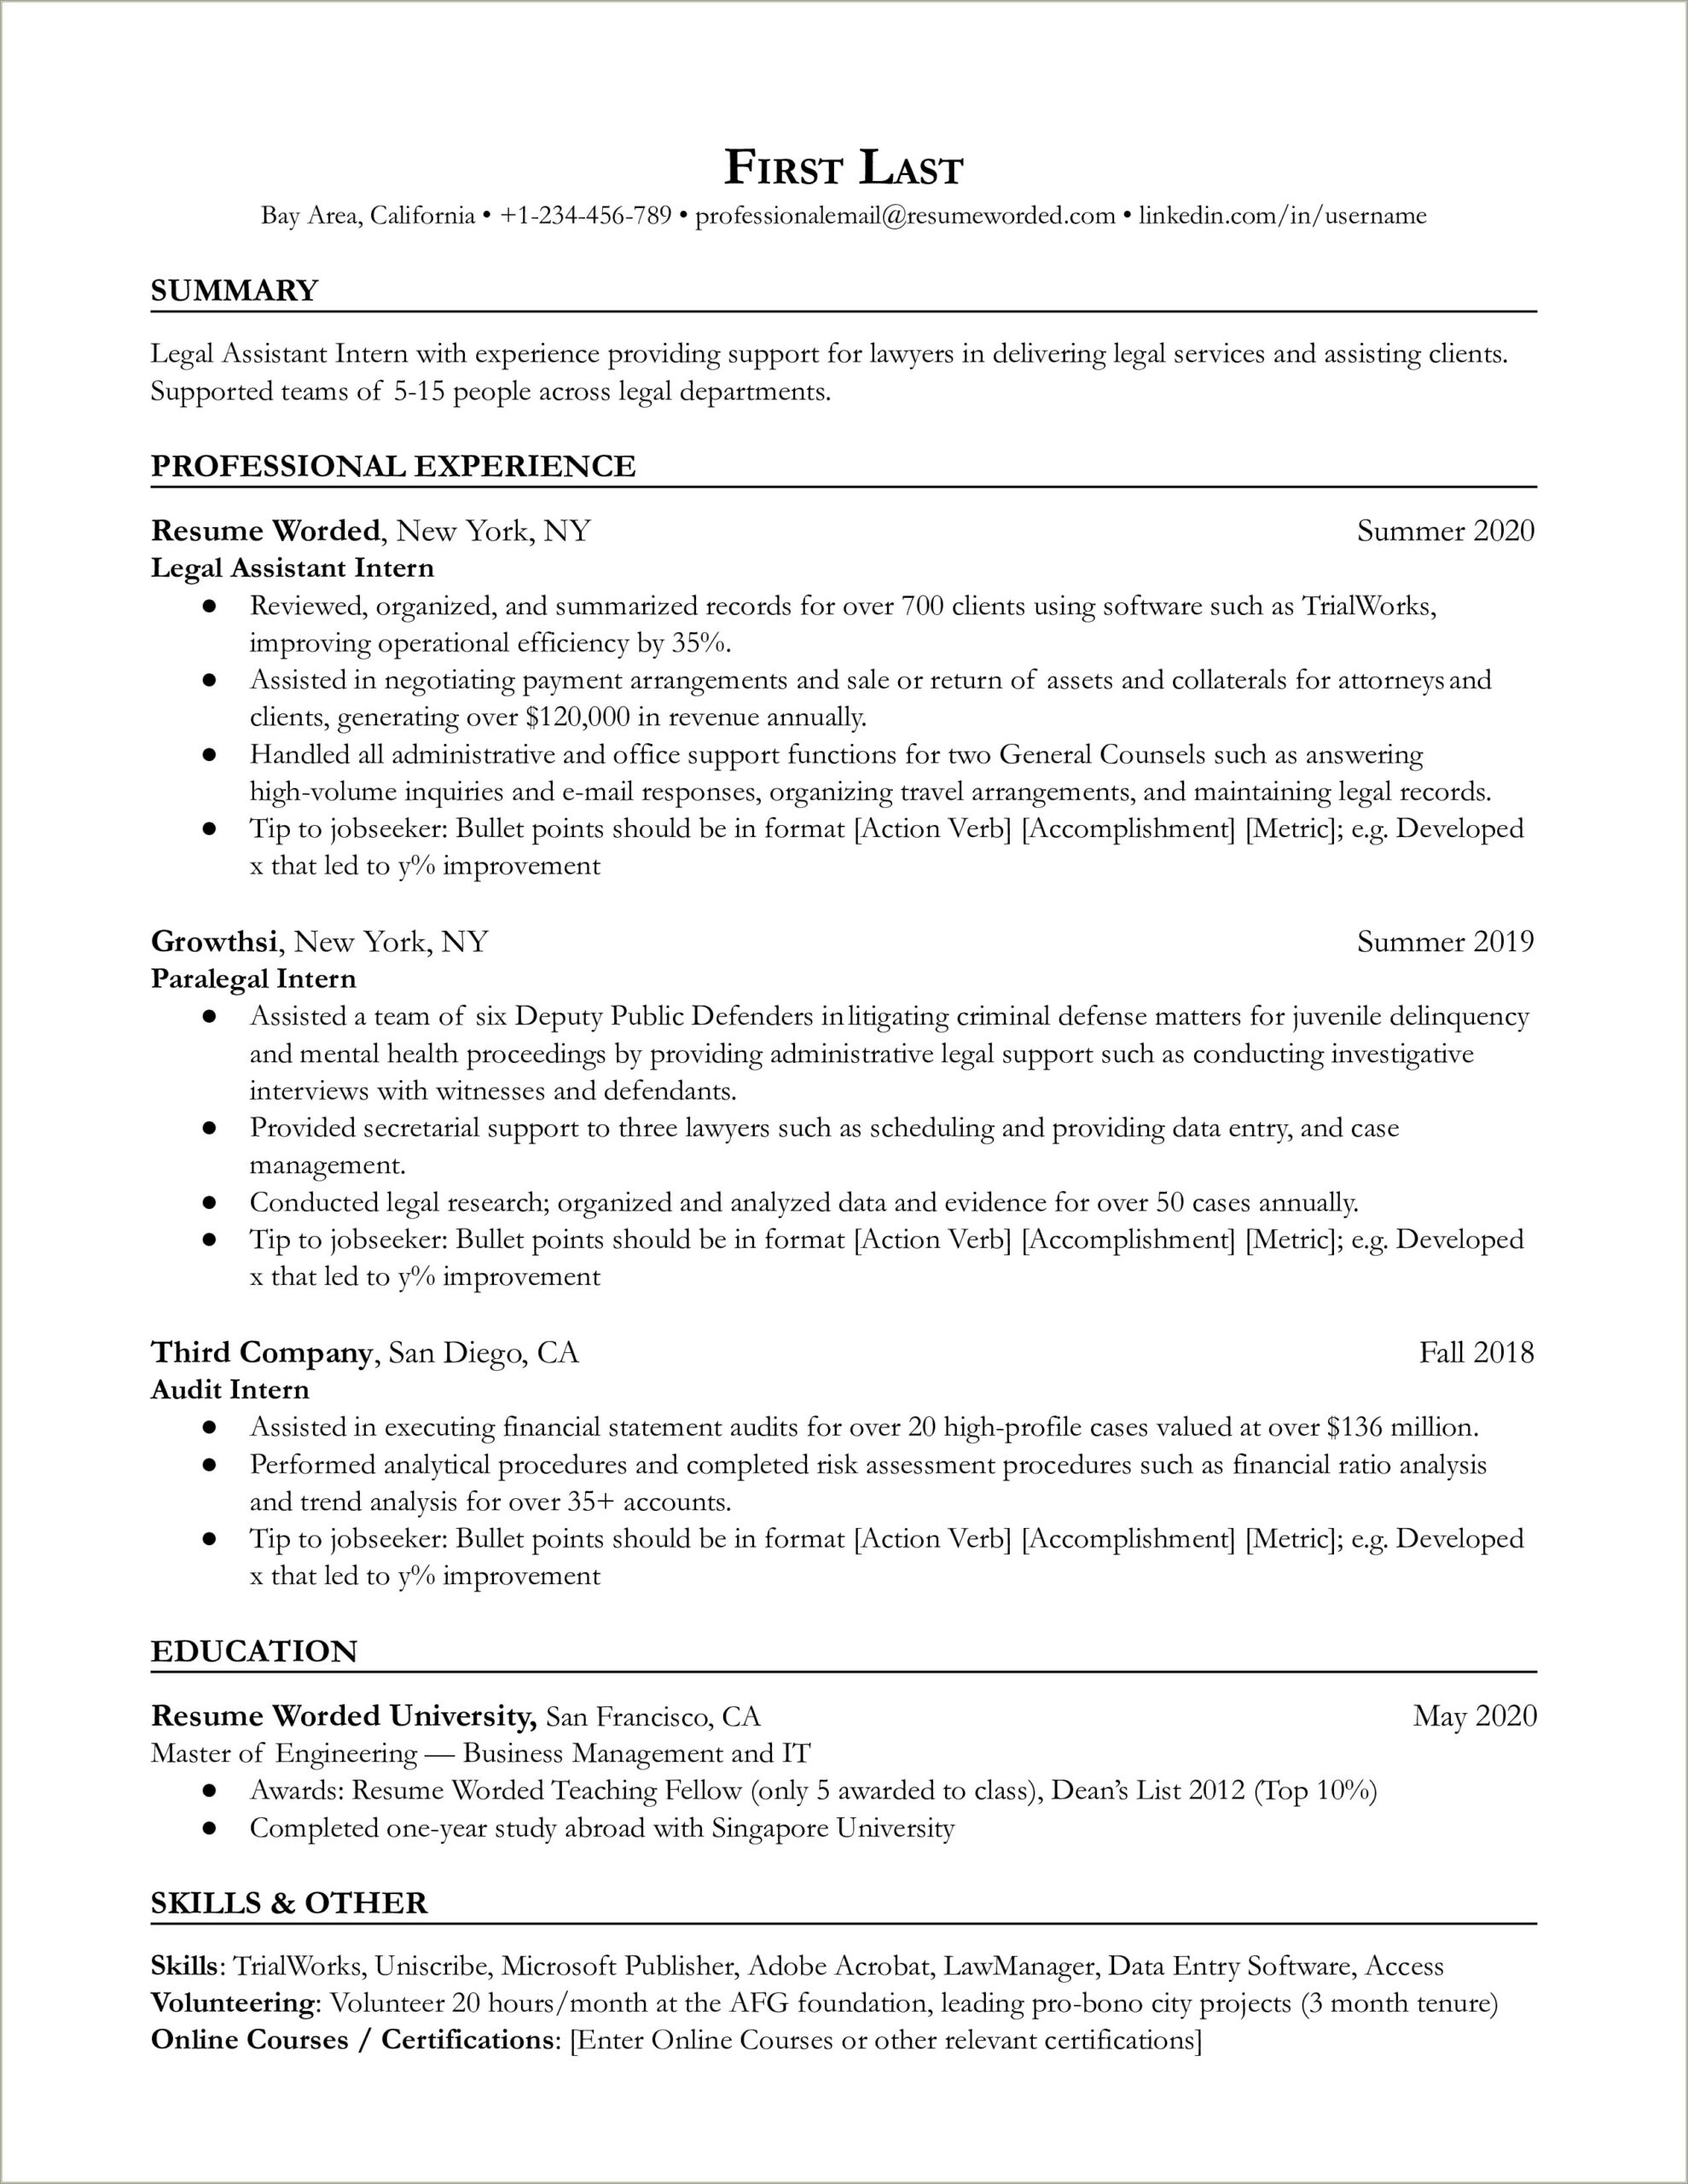 Legal Assistant Intern Job Description For Resume